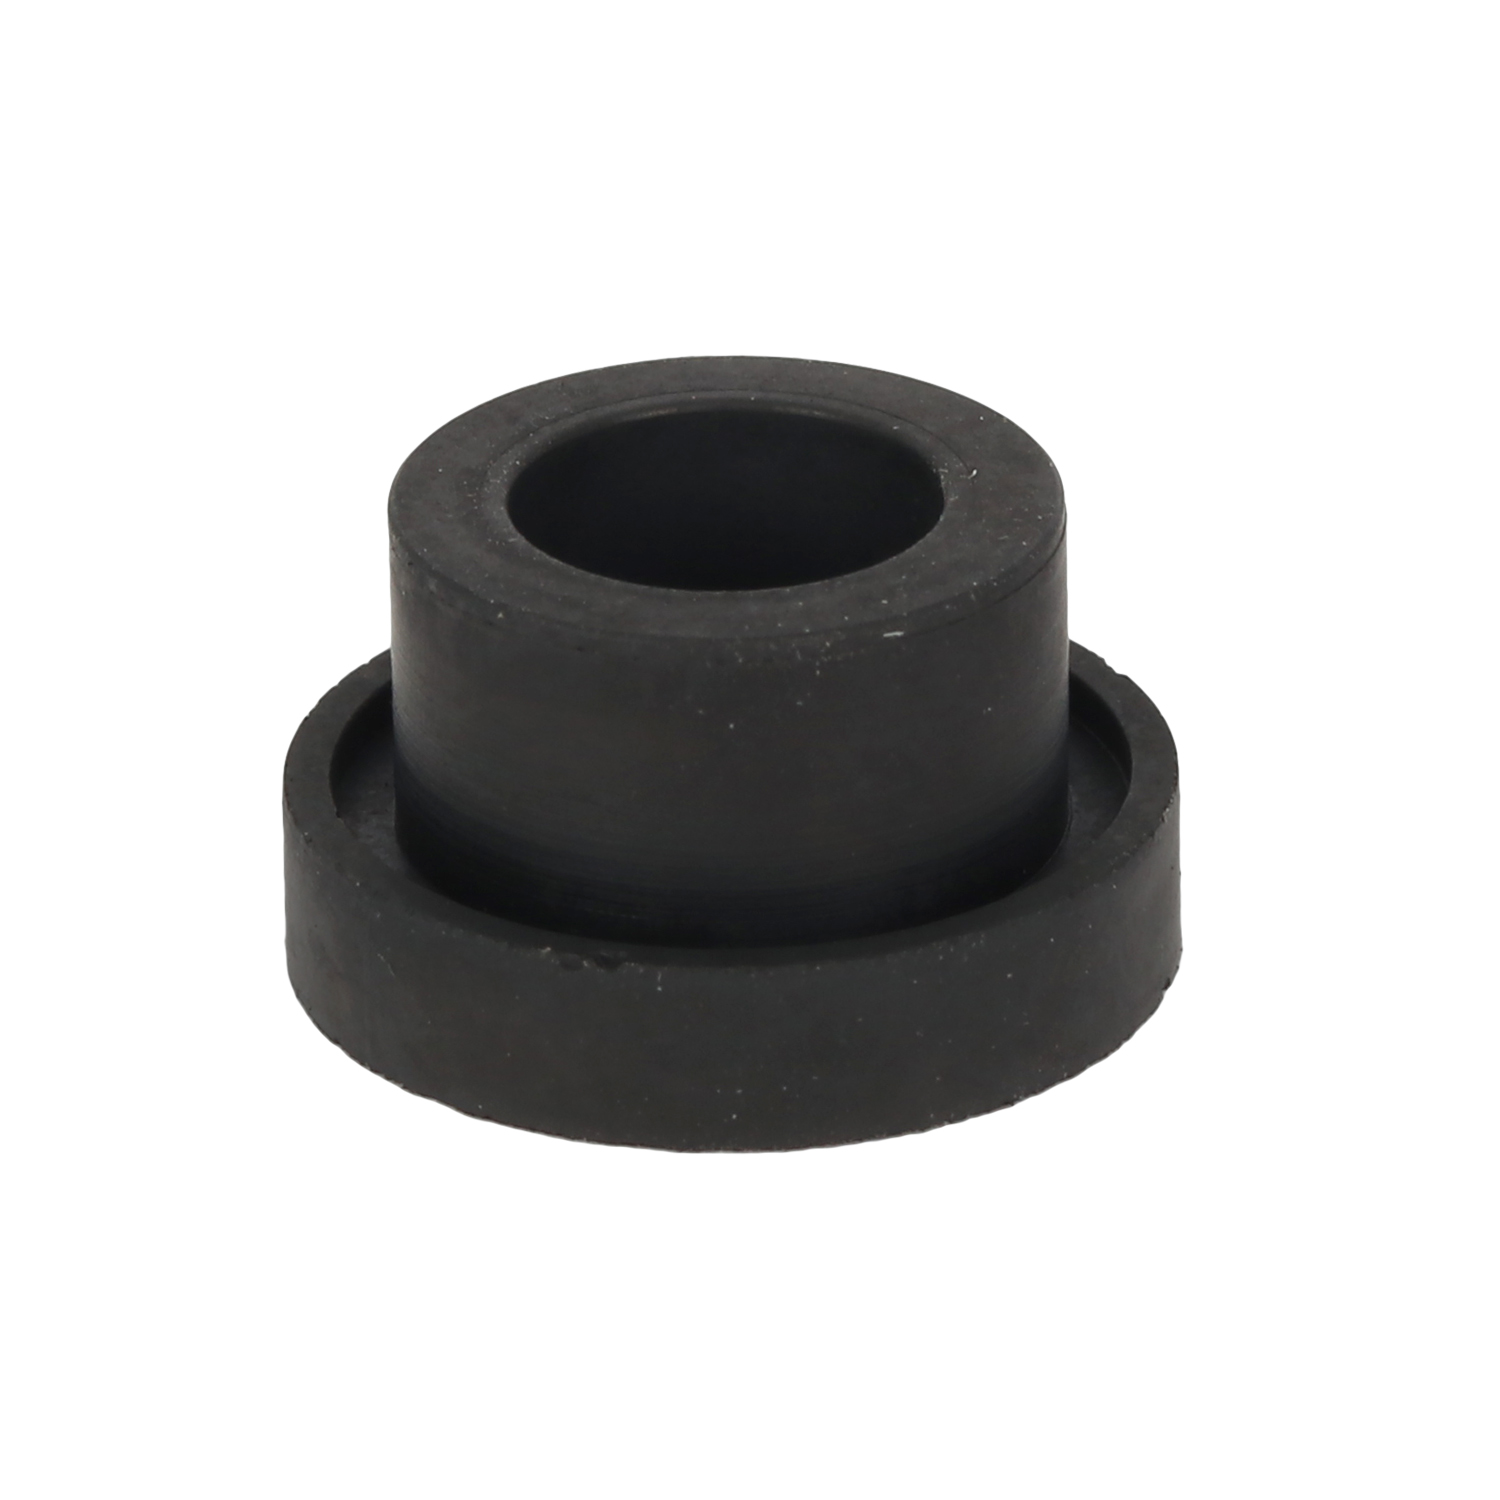 Productfoto van SKS Rubber insert Dunlop/Schrader for valve nipples - 1 piece